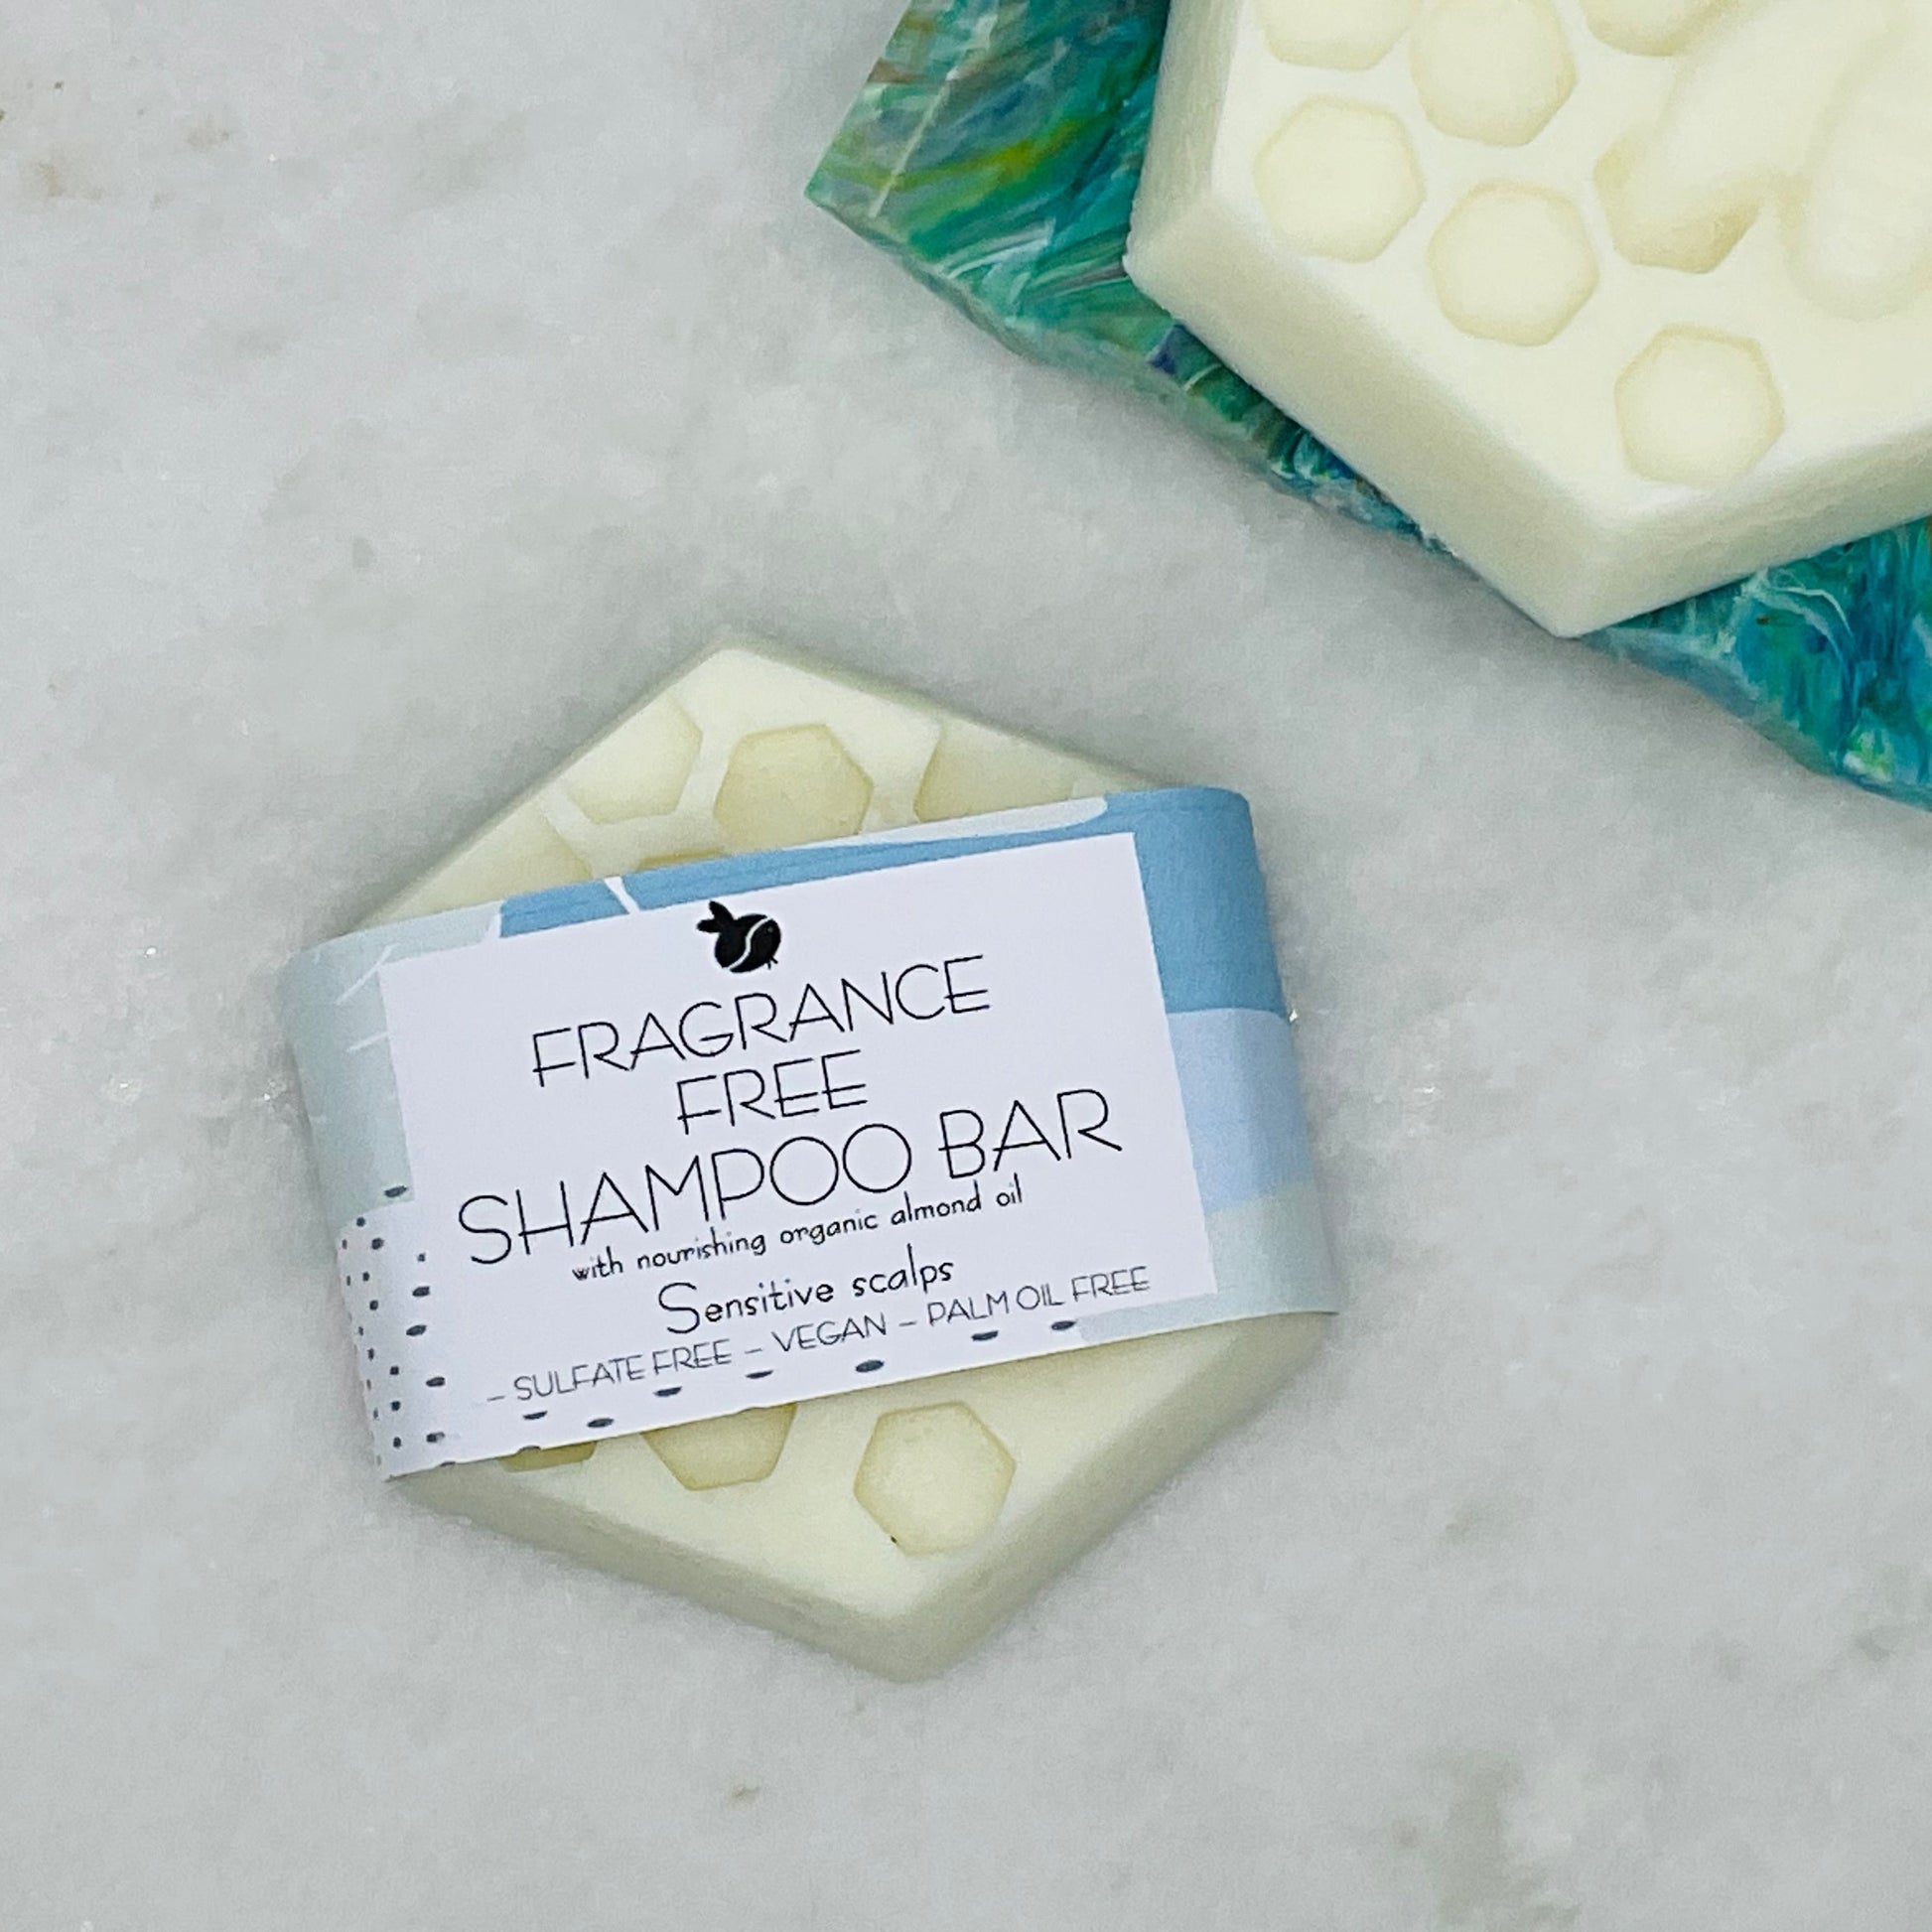 Fragrance free shampoo bar - Bean and Bee